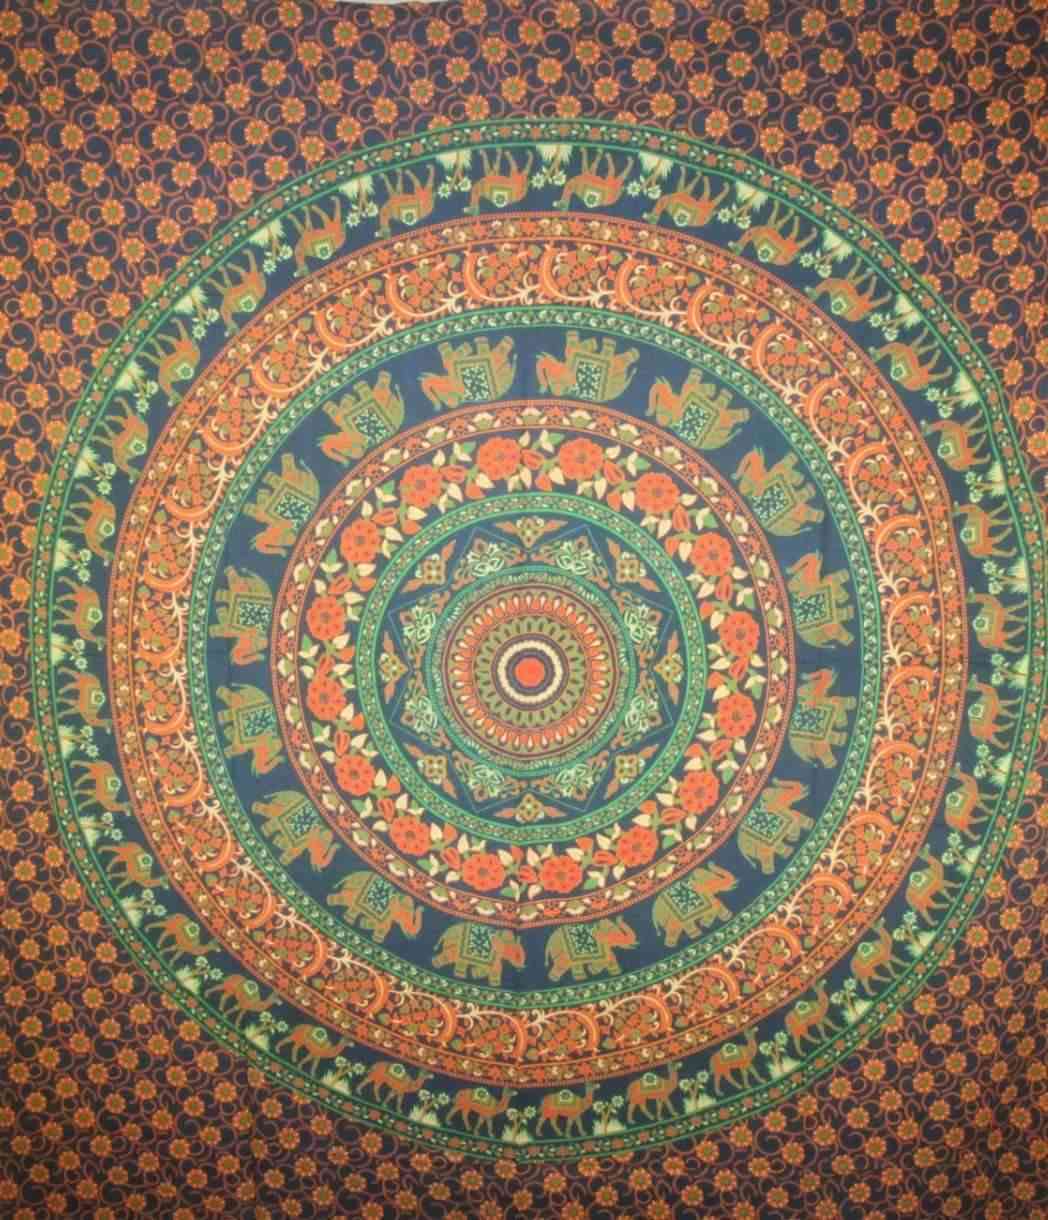 Dark Blue, Kaleidoscope, Mandala Flowers & Animals Tapestry